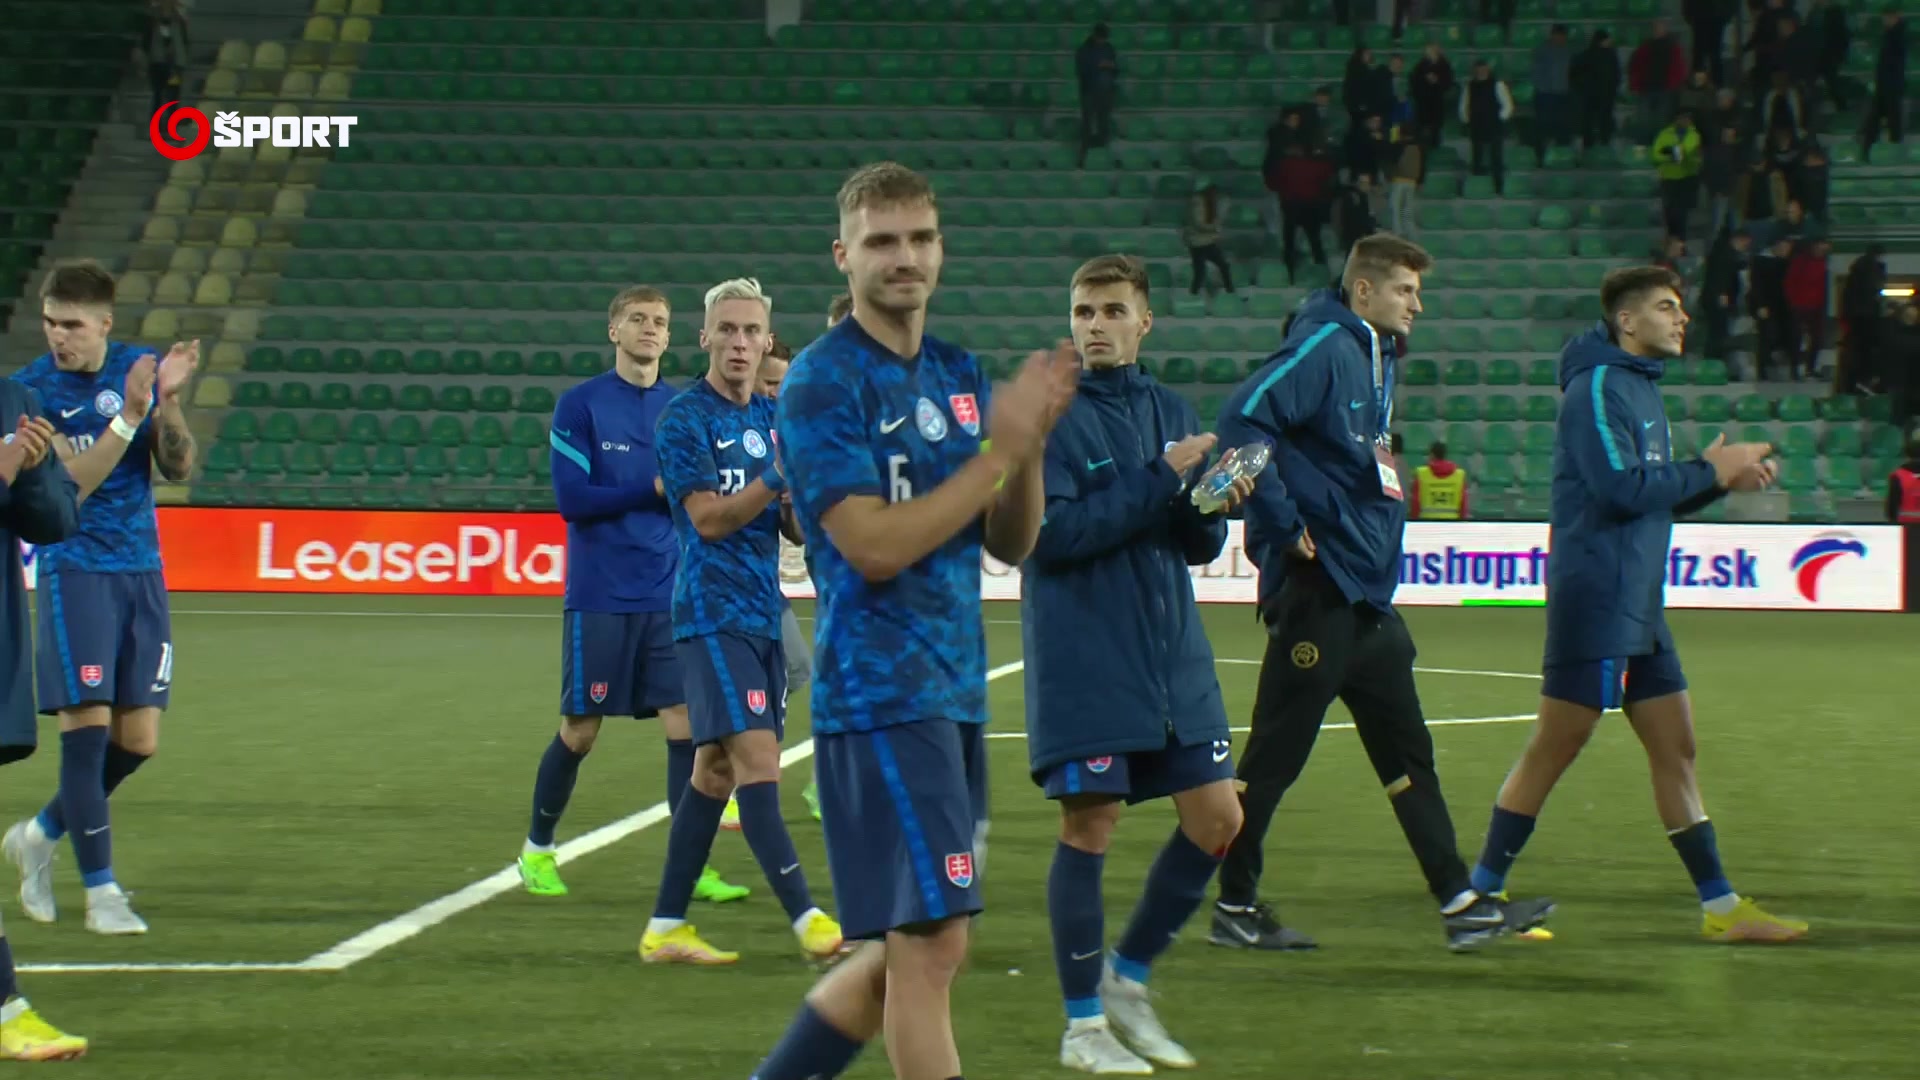 VIDEO - Highlighty z baráže Slovensko U21 - Ukrajina U21 3:2 | Šport.sk